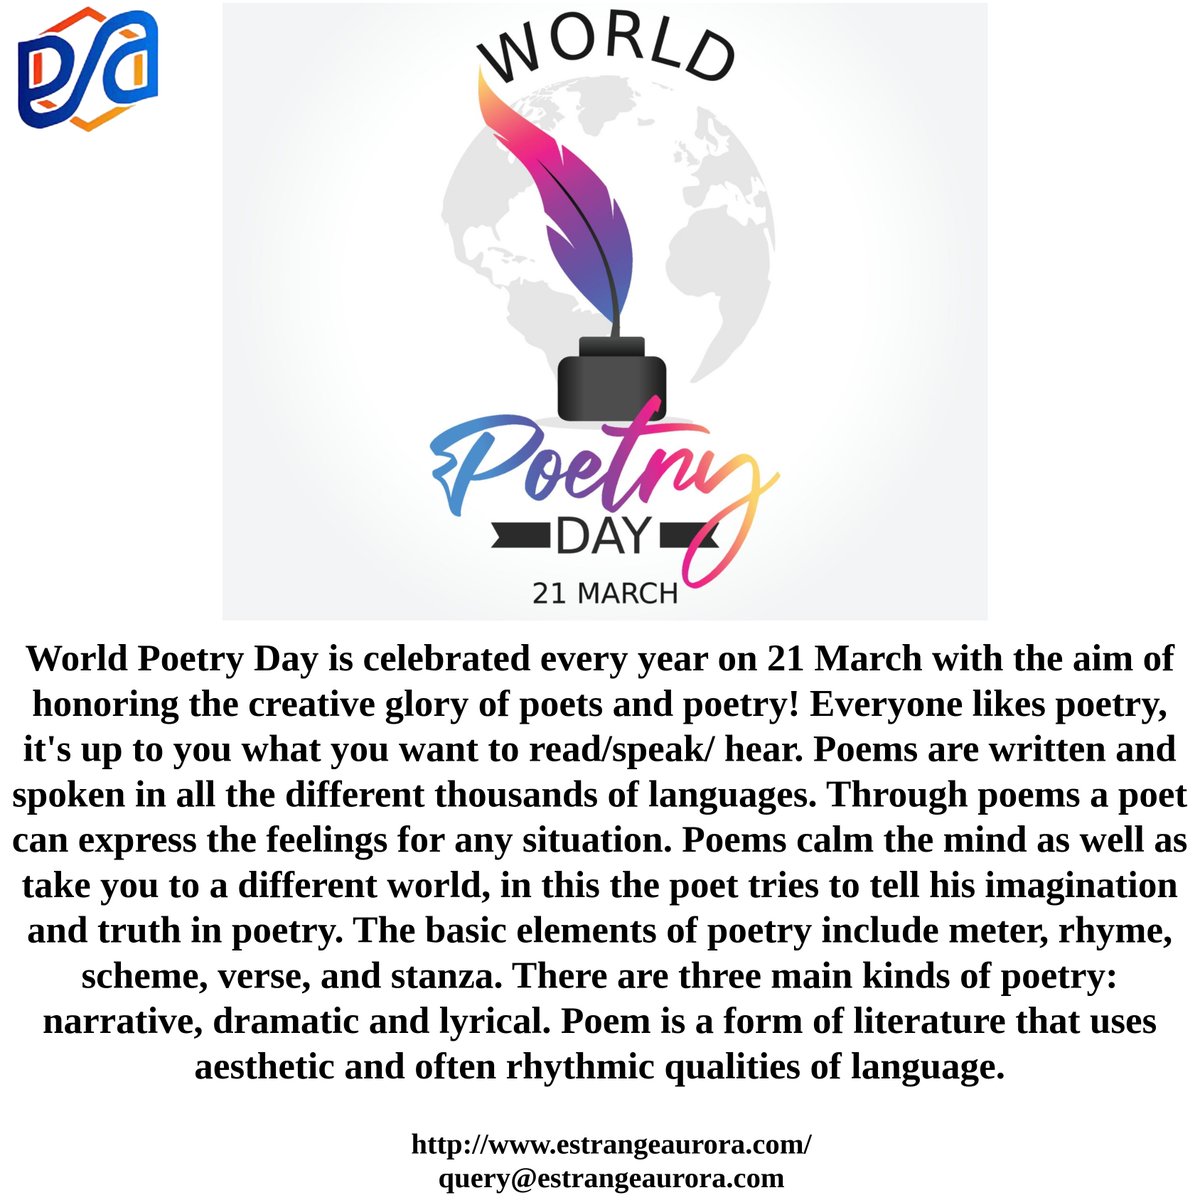 World Poetry Day from Estrange Aurora.
#worldpoetryday #poetry #prosepoetry #poetrydaily #instapoetrygram #poetrynight #poetryaccount #poetryoninstagram #originalpoetry #romanticpoetry #packpoetry #poetryofinsta #seasonspoetry #globalagepoetry #communityofpoetry #EstrangeAurora